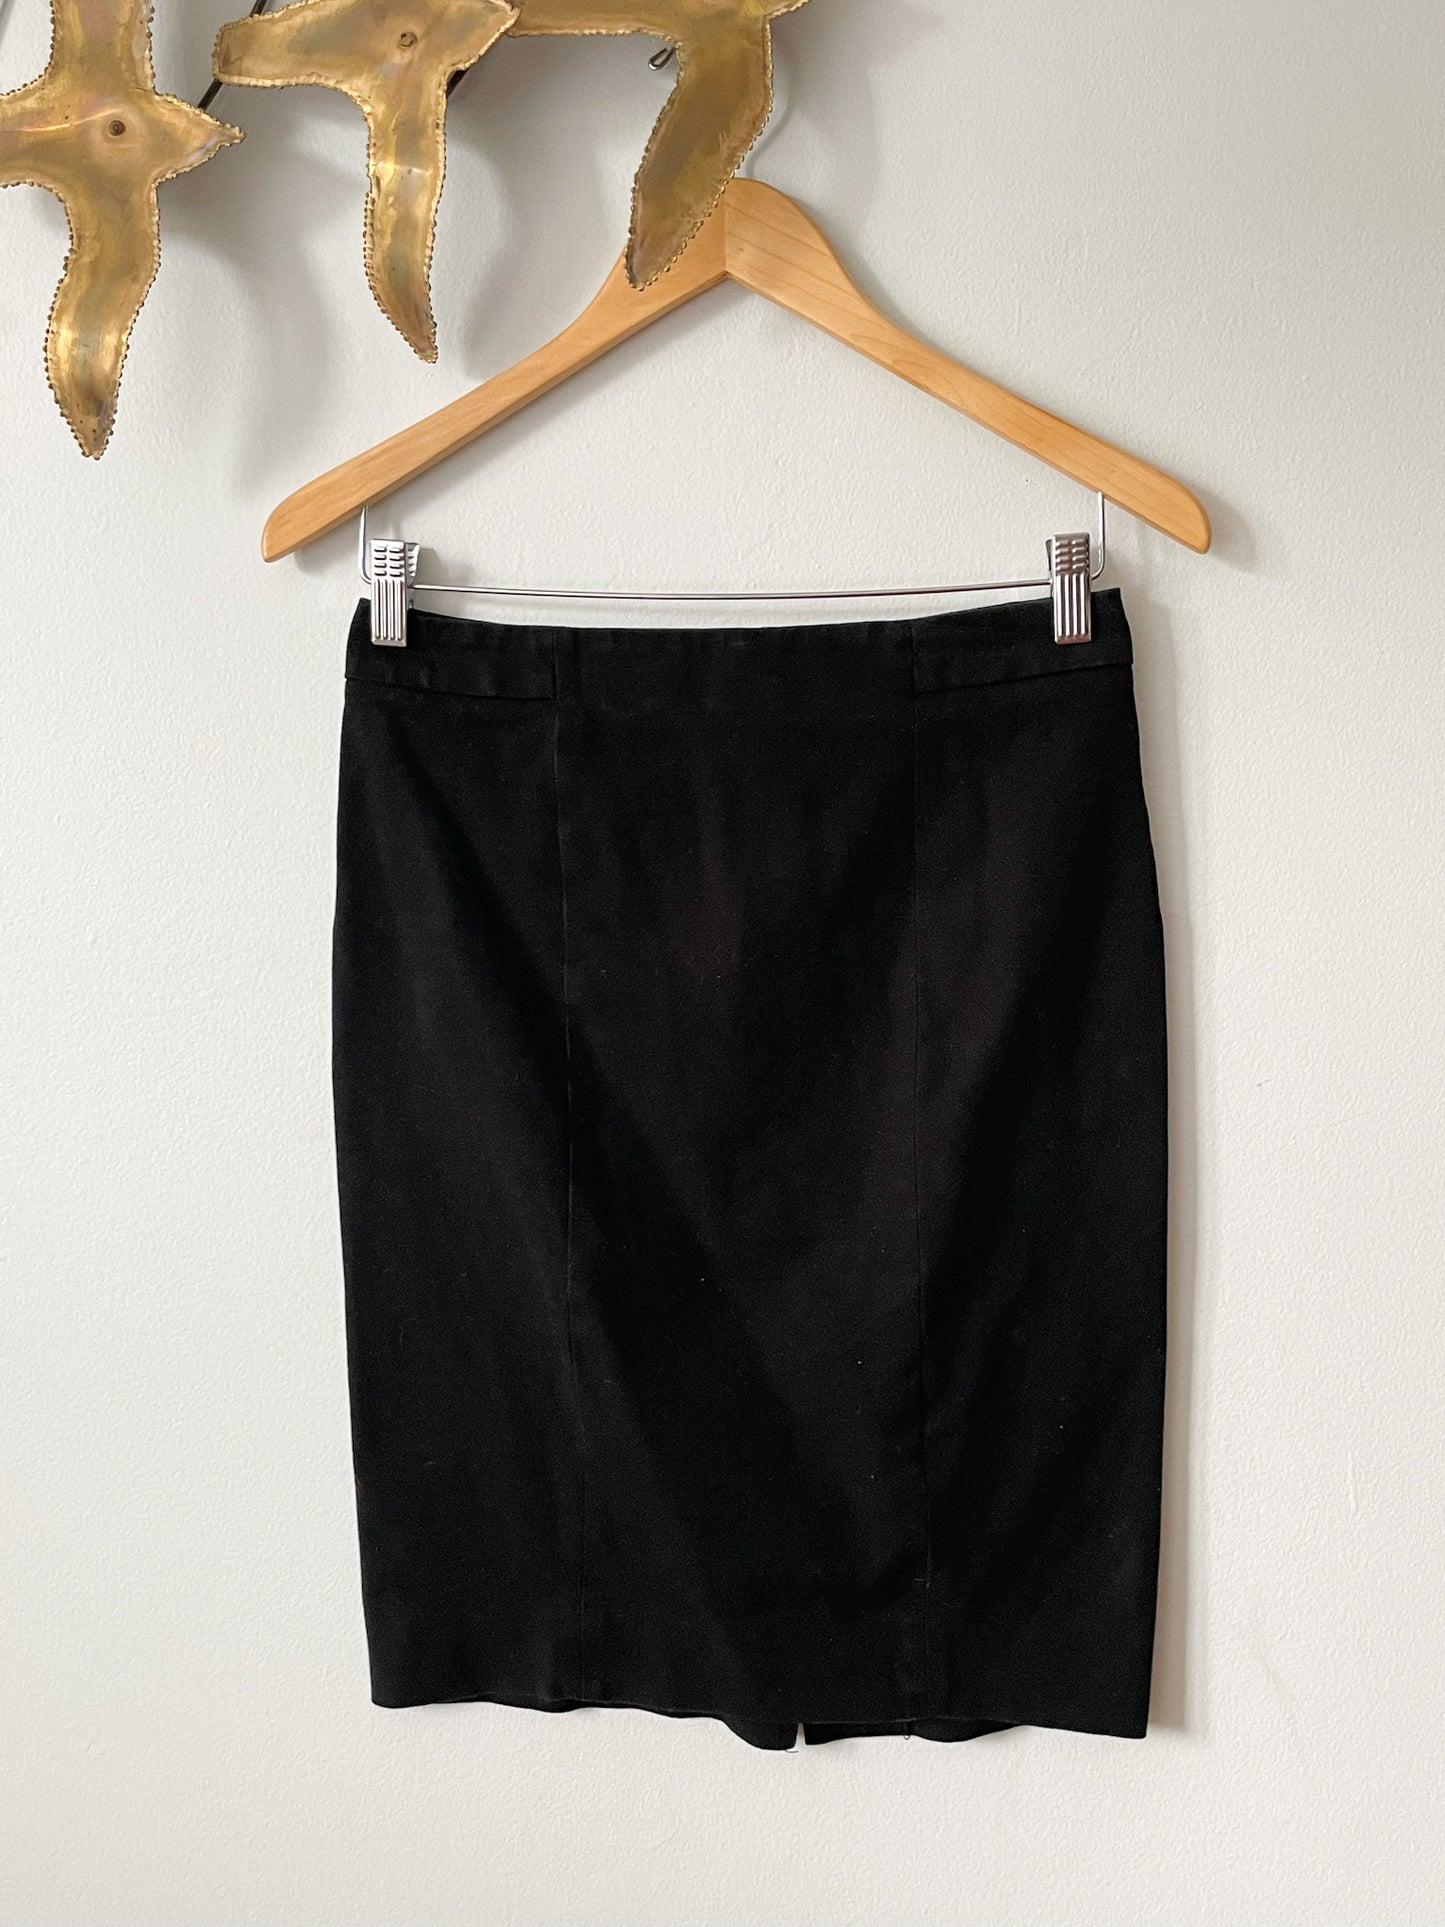 GAP Black Cotton Stretch Pencil Skirt - Small